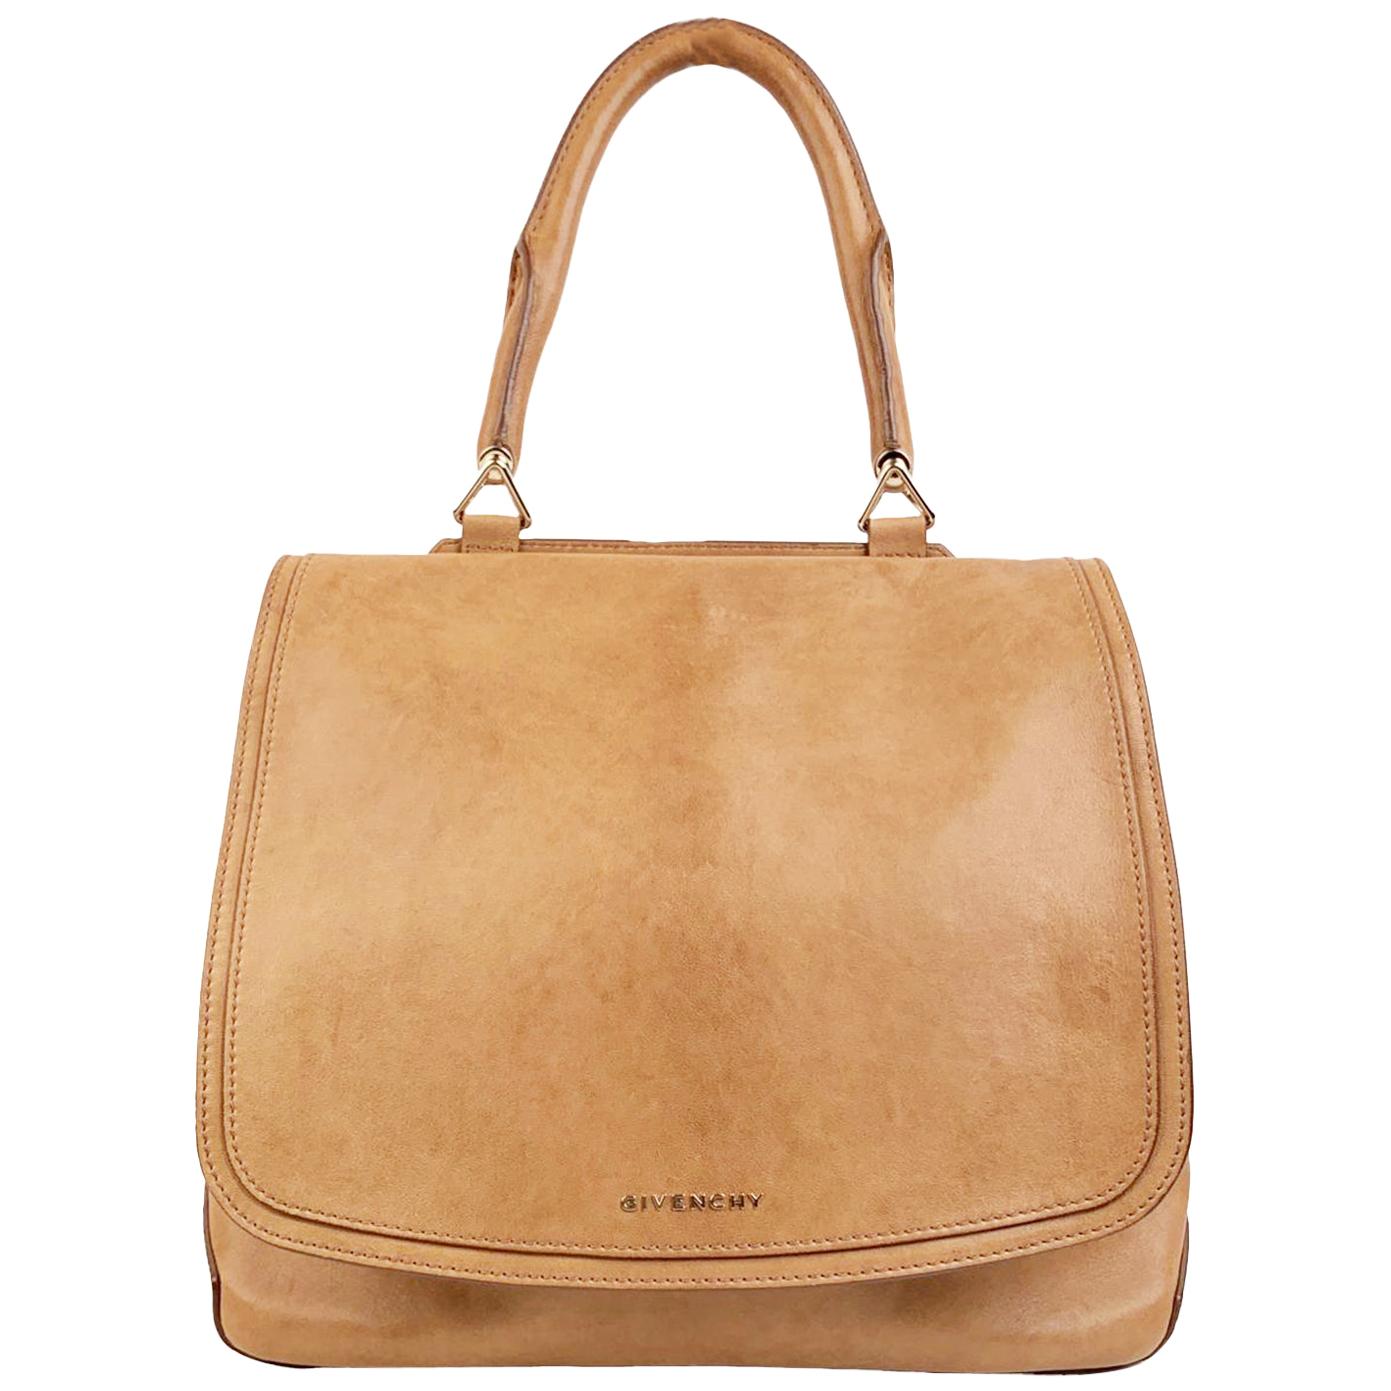 Givenchy Tan Leather Large New Line Flap Tote Shoulder Bag